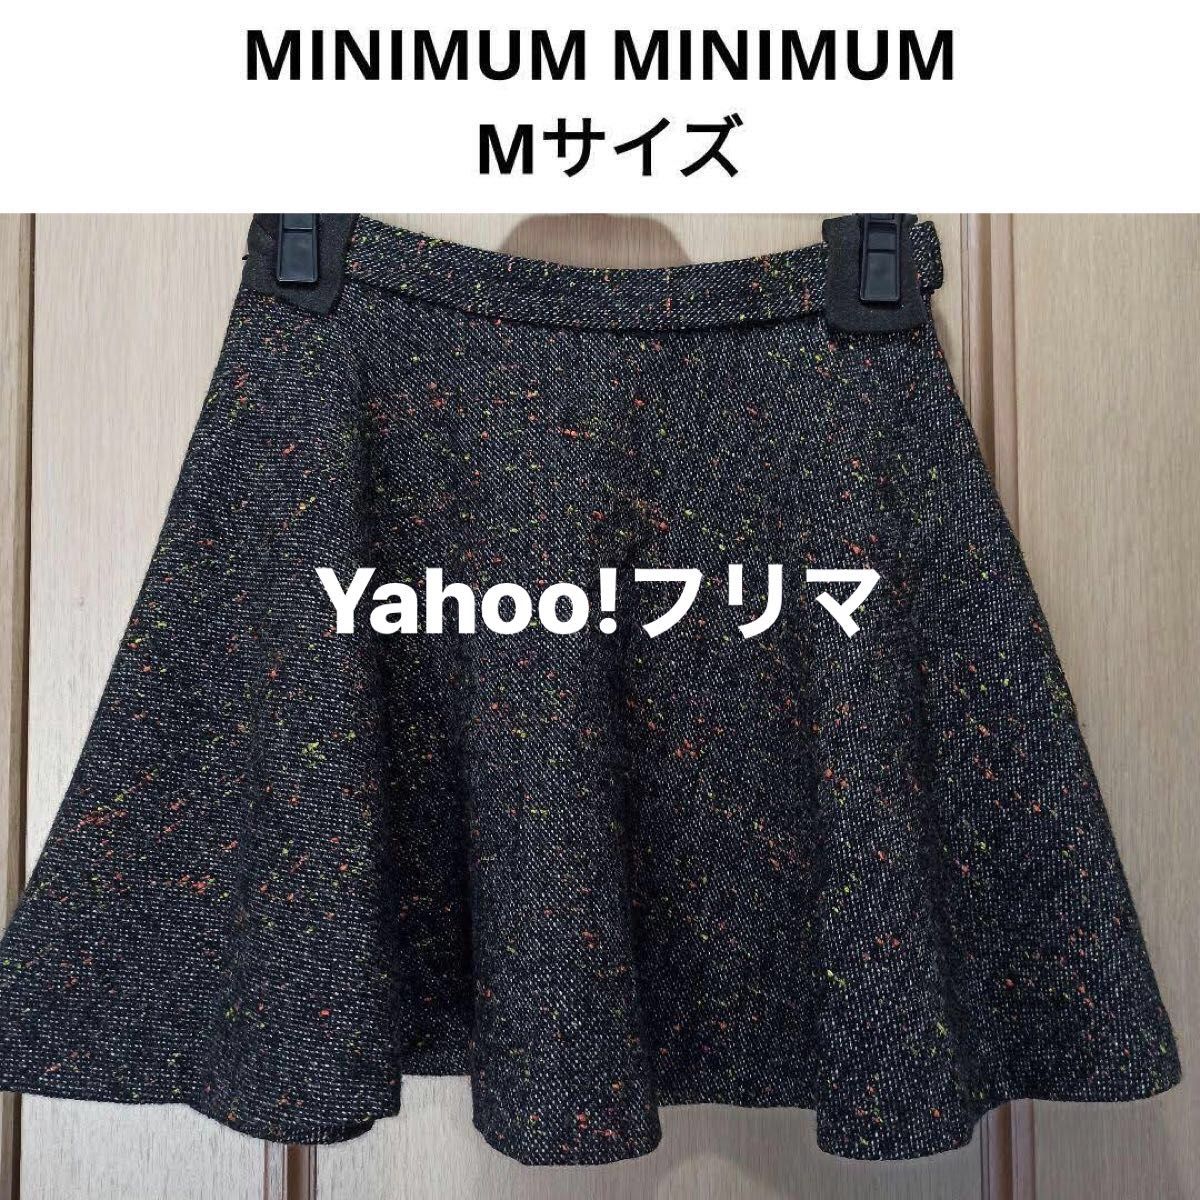 MINIMUM MINIMUM スカート ツイード カラーネップ Mサイズ ミニマムミニマム